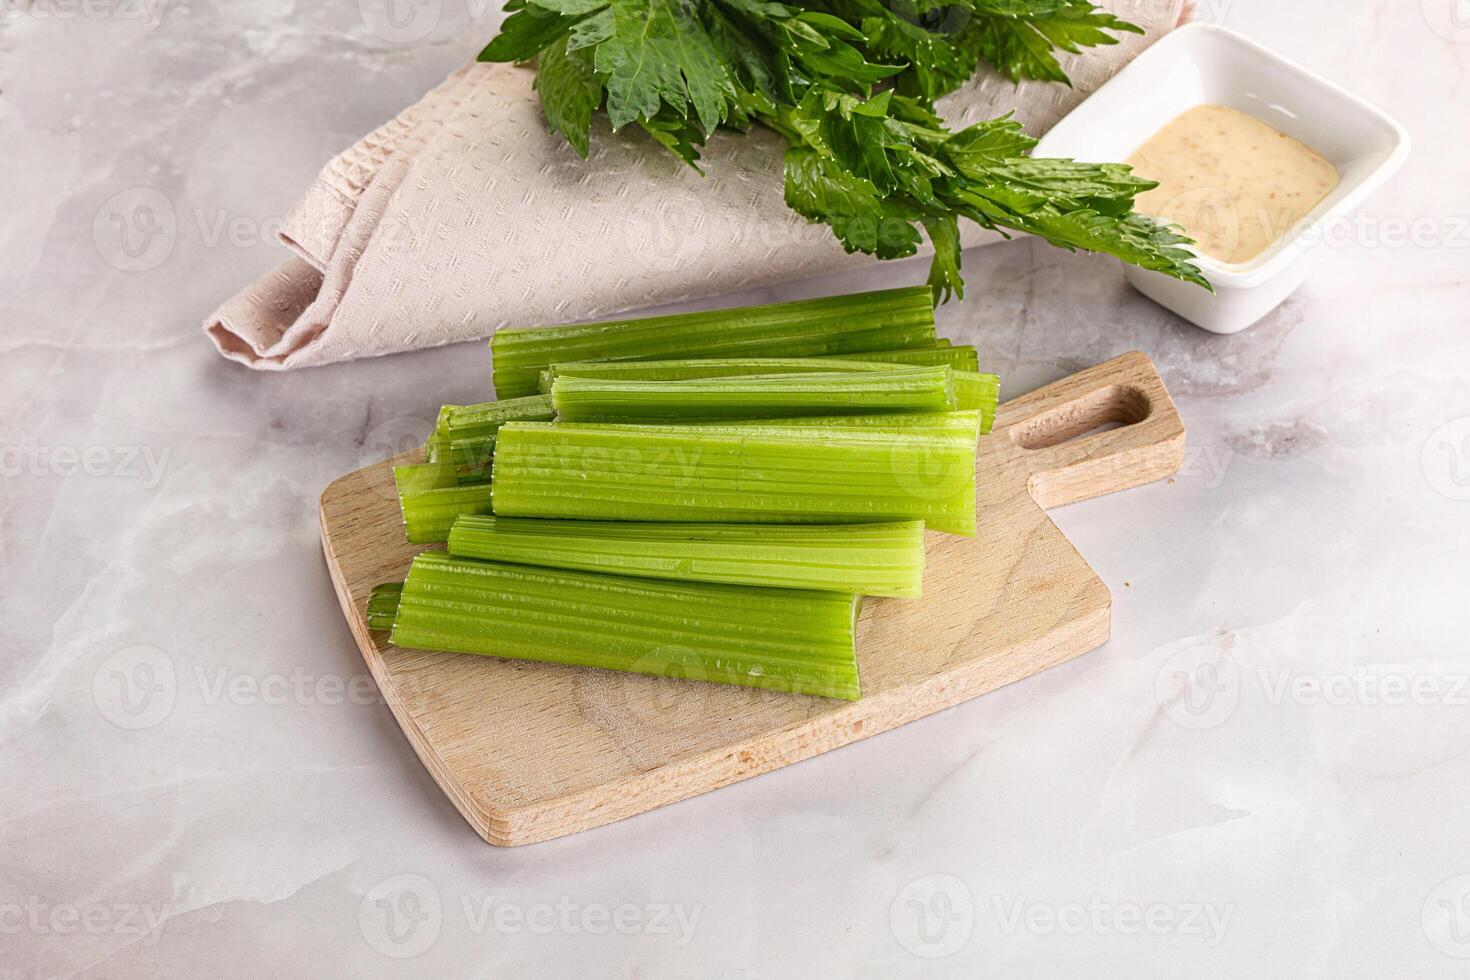 Vegan cuisine - dietary celery cticks photo